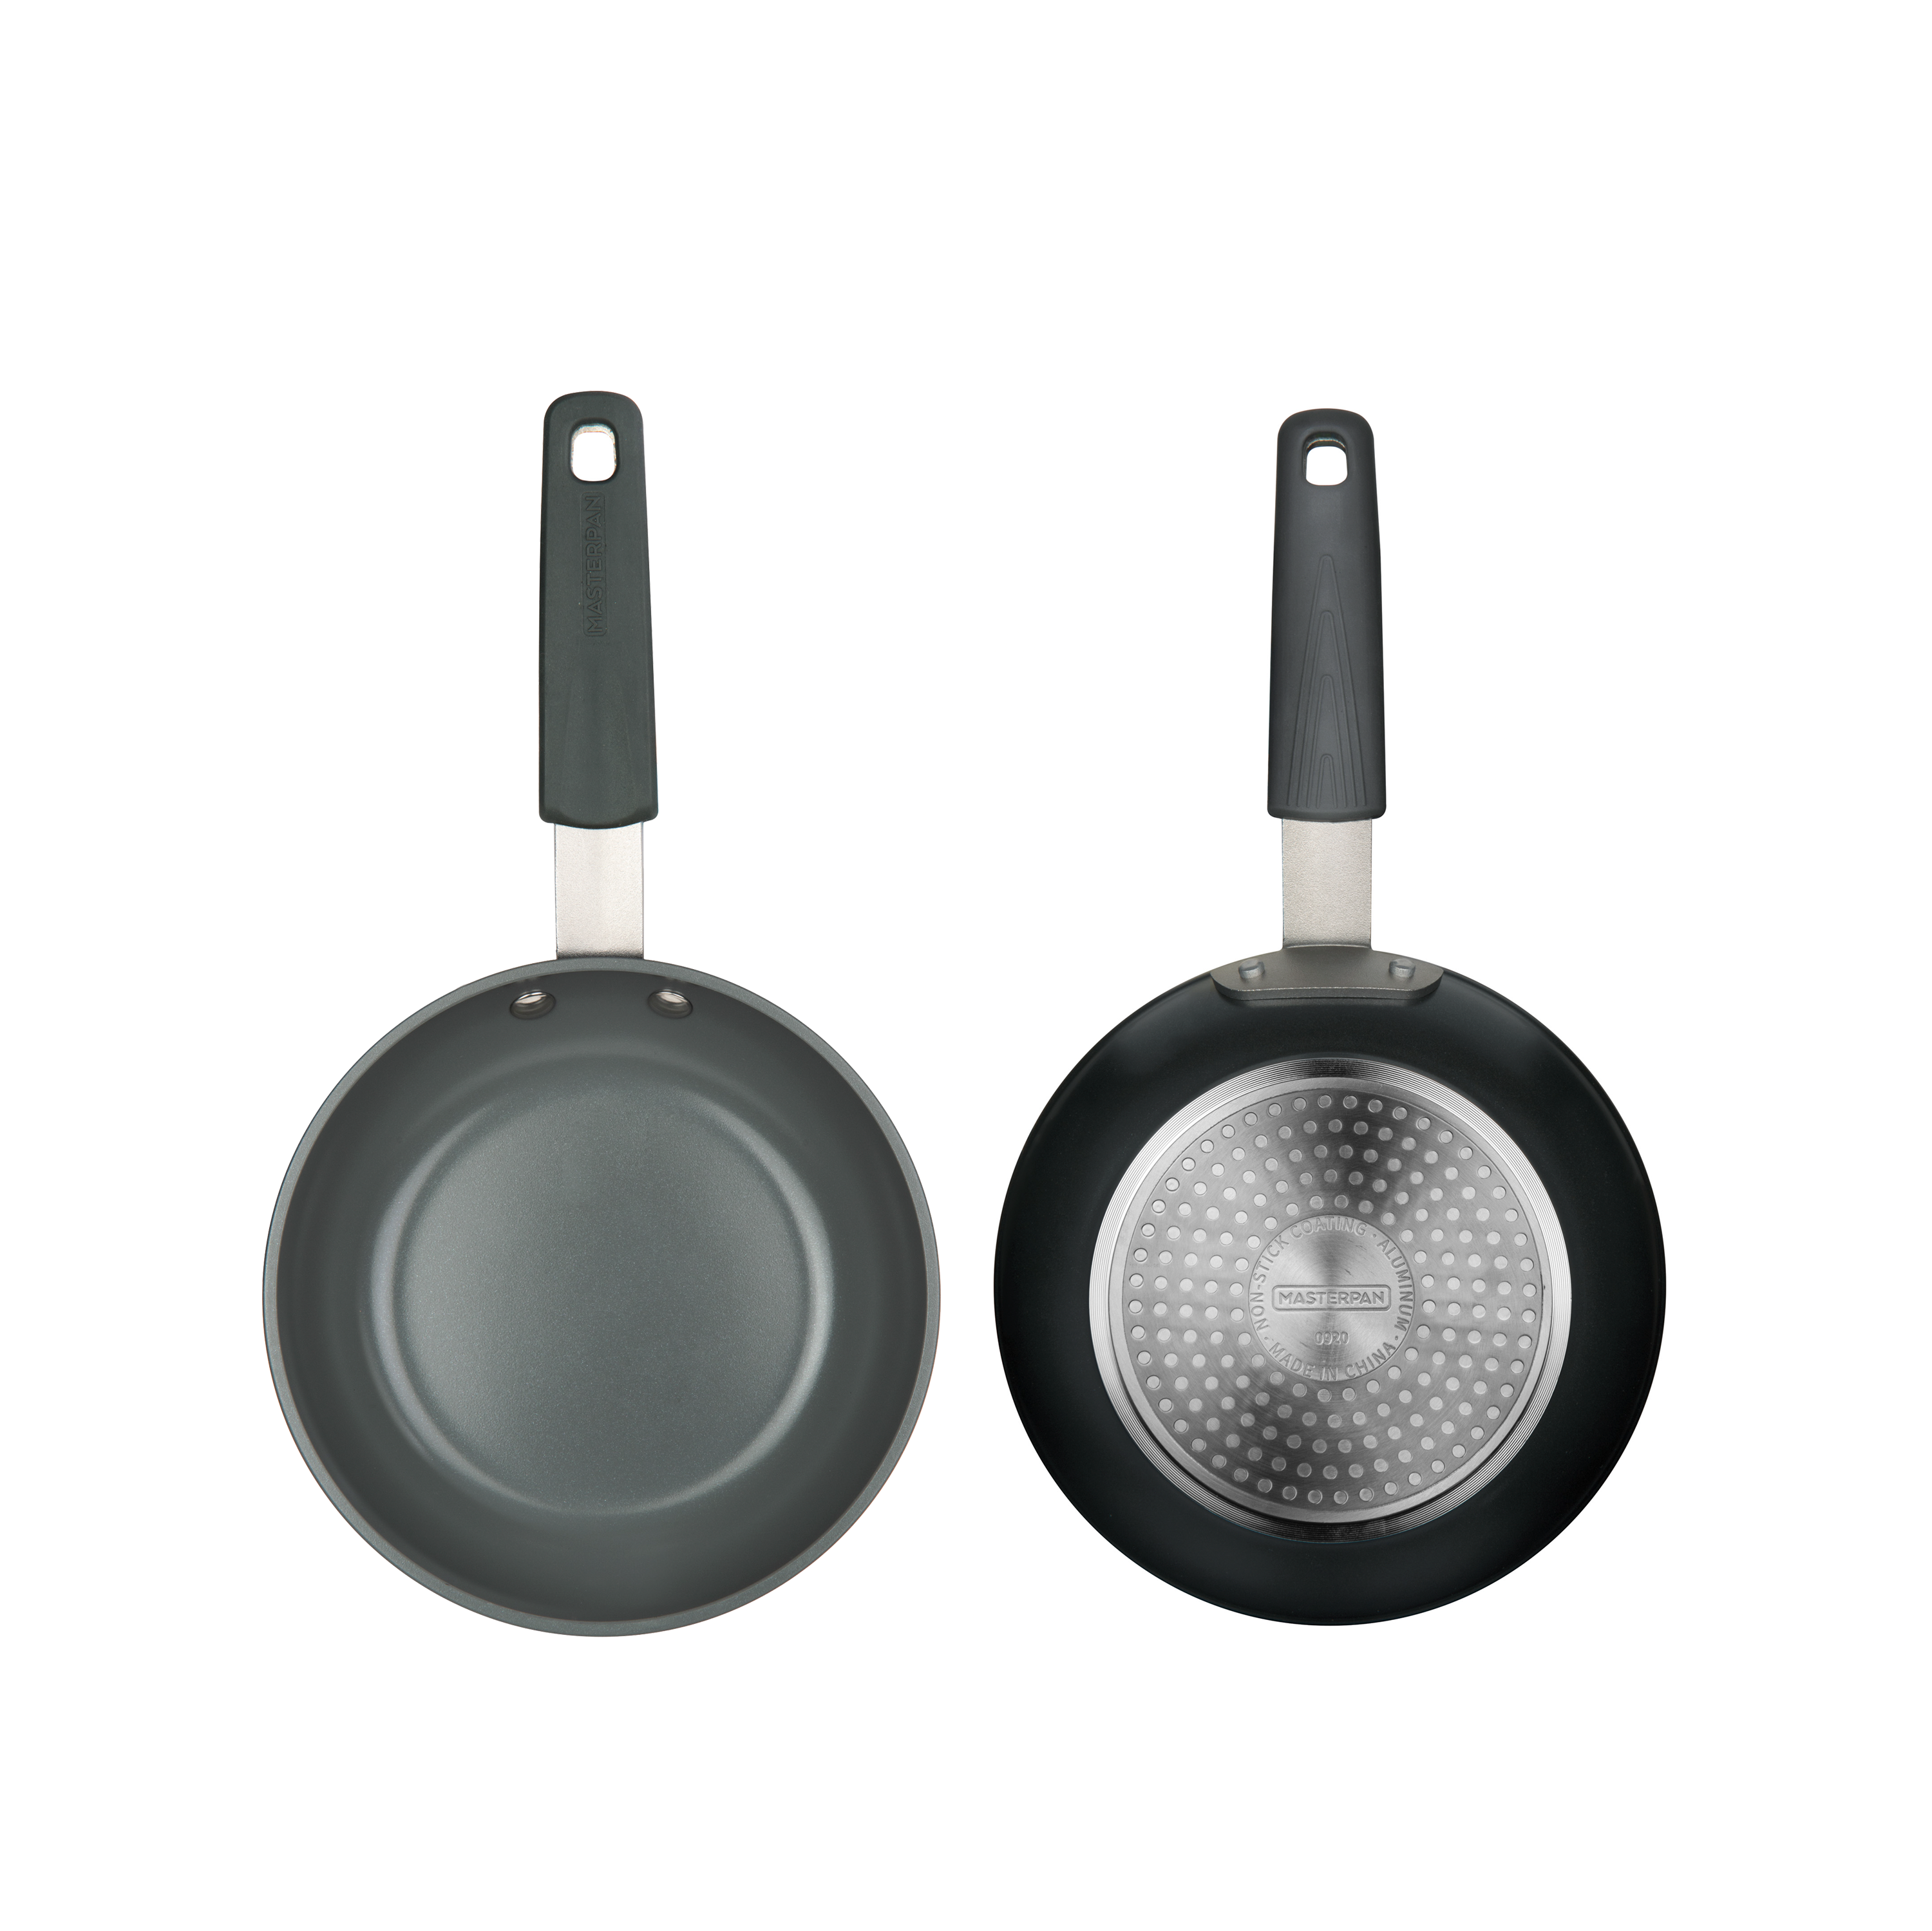 CSK 8''+11'' Nonstick Frying Pan Set with Lids - Hard-Anodized Nonstick Fry  Pan Set with Granite Coating, Stir Fry Skillet Set with Handle, PFOA 